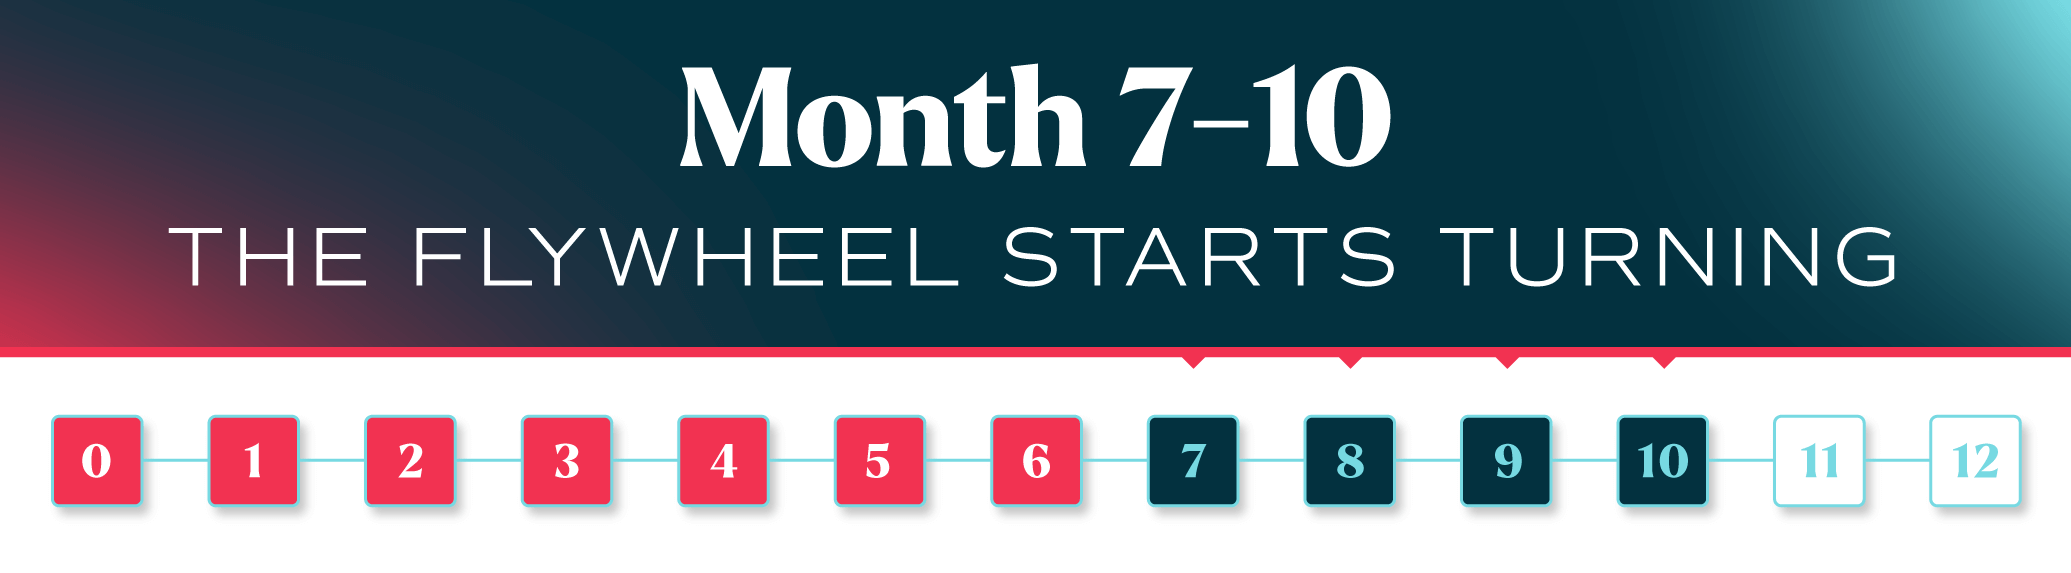 Month 7-10: The Flywheel starts turning